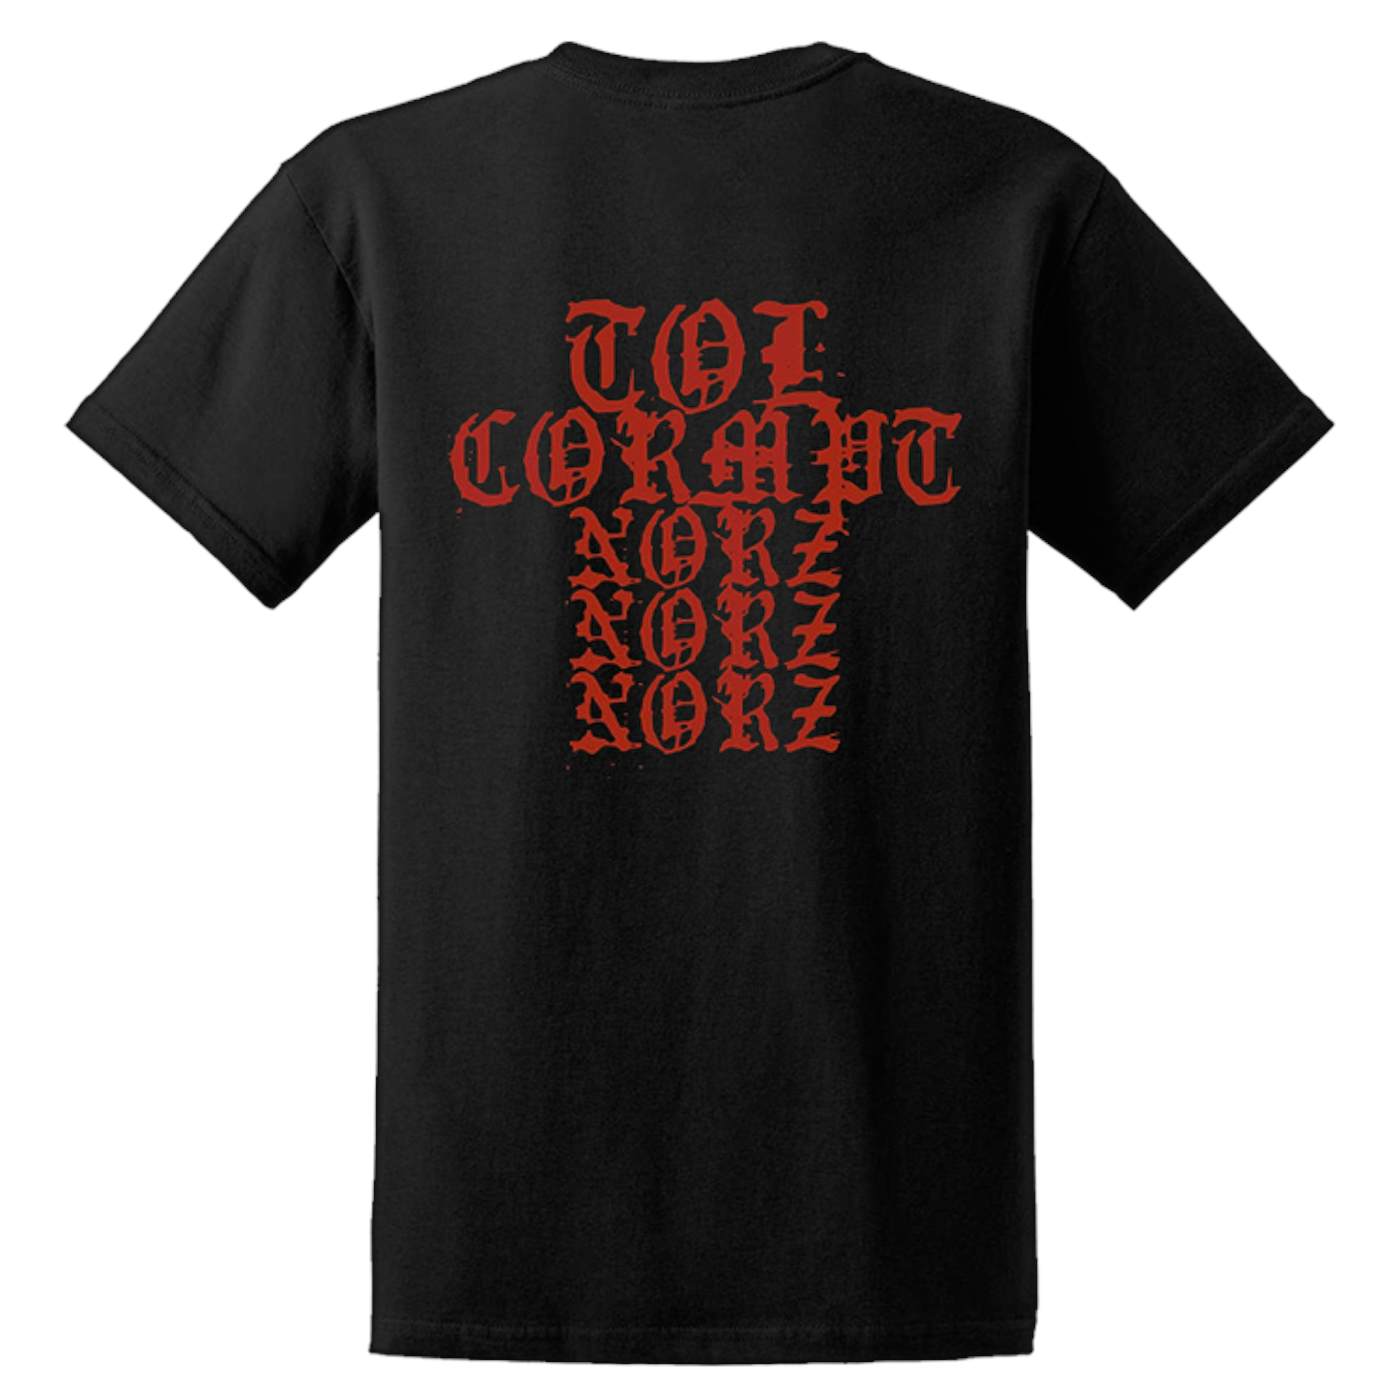 IMPALED NAZARENE - 'Tol Cormpt Norz Norz Norz' T-Shirt